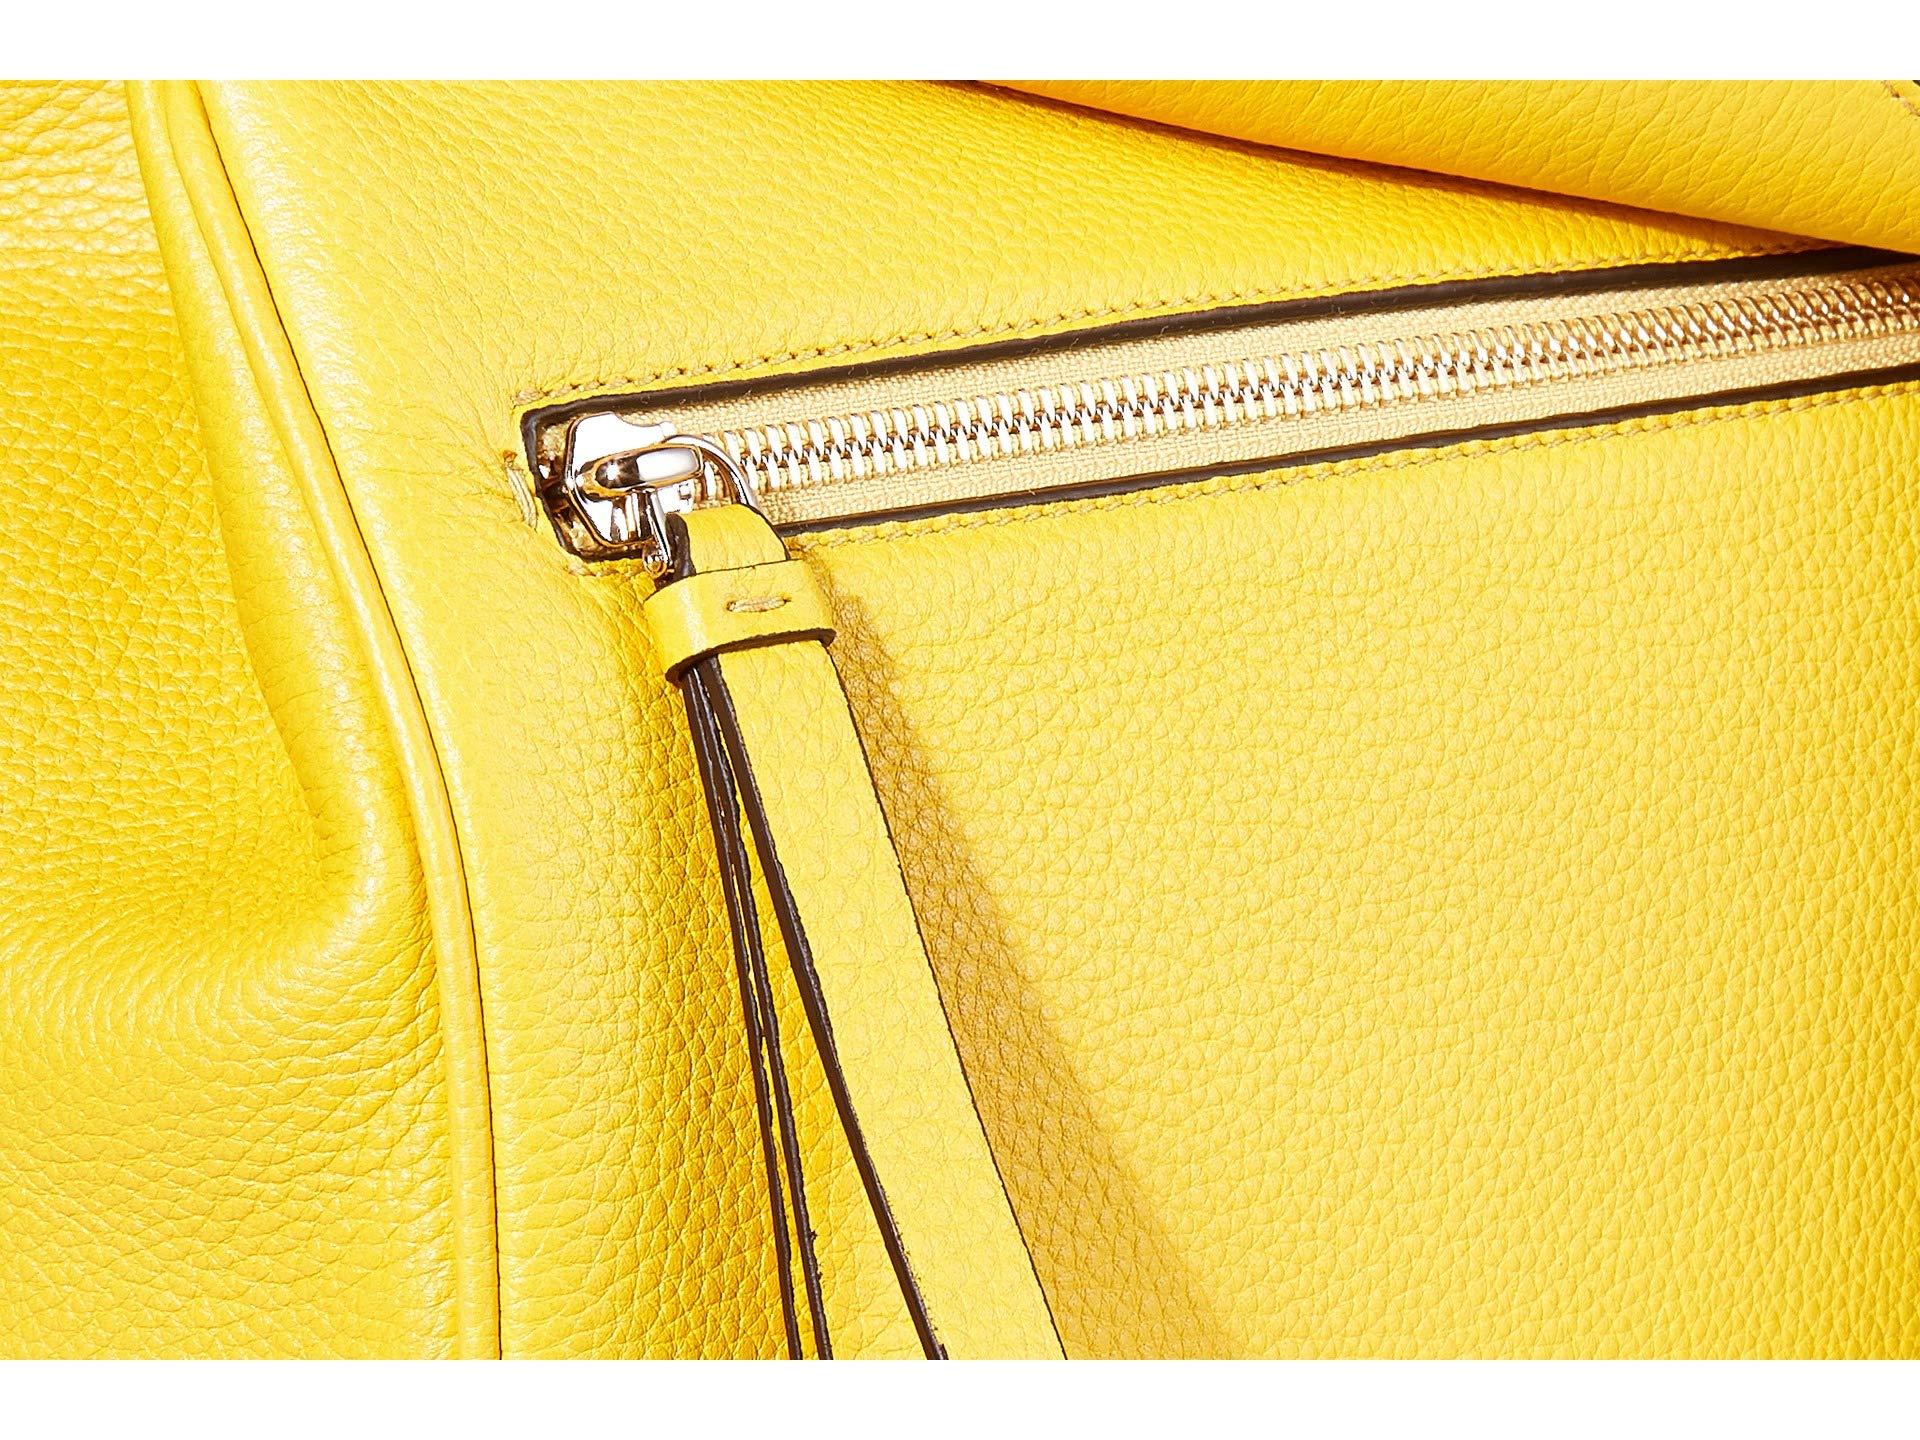 Ferragamo Studio Calfskin Leather Top Handle Bag in Yellow - Save 22% ...